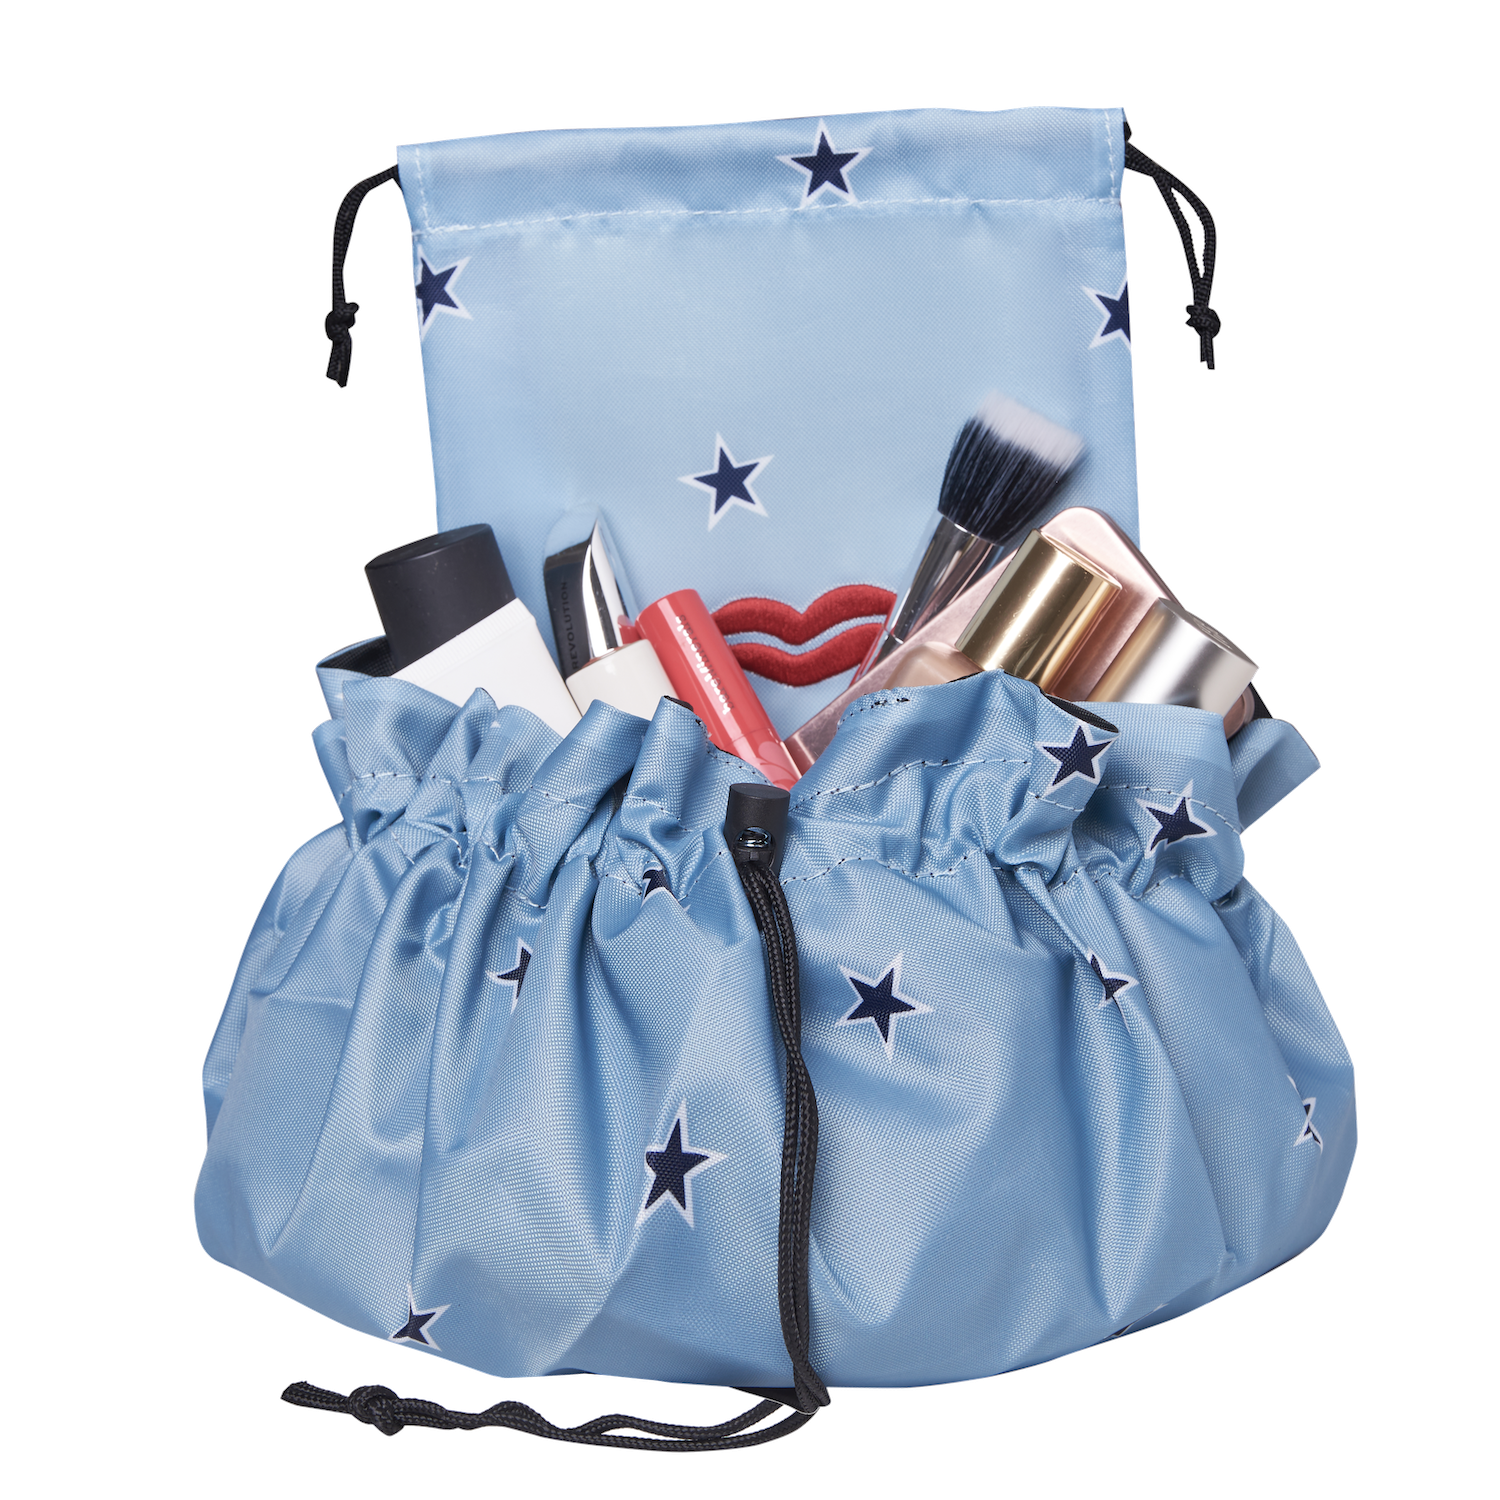 Blue star print wash bag